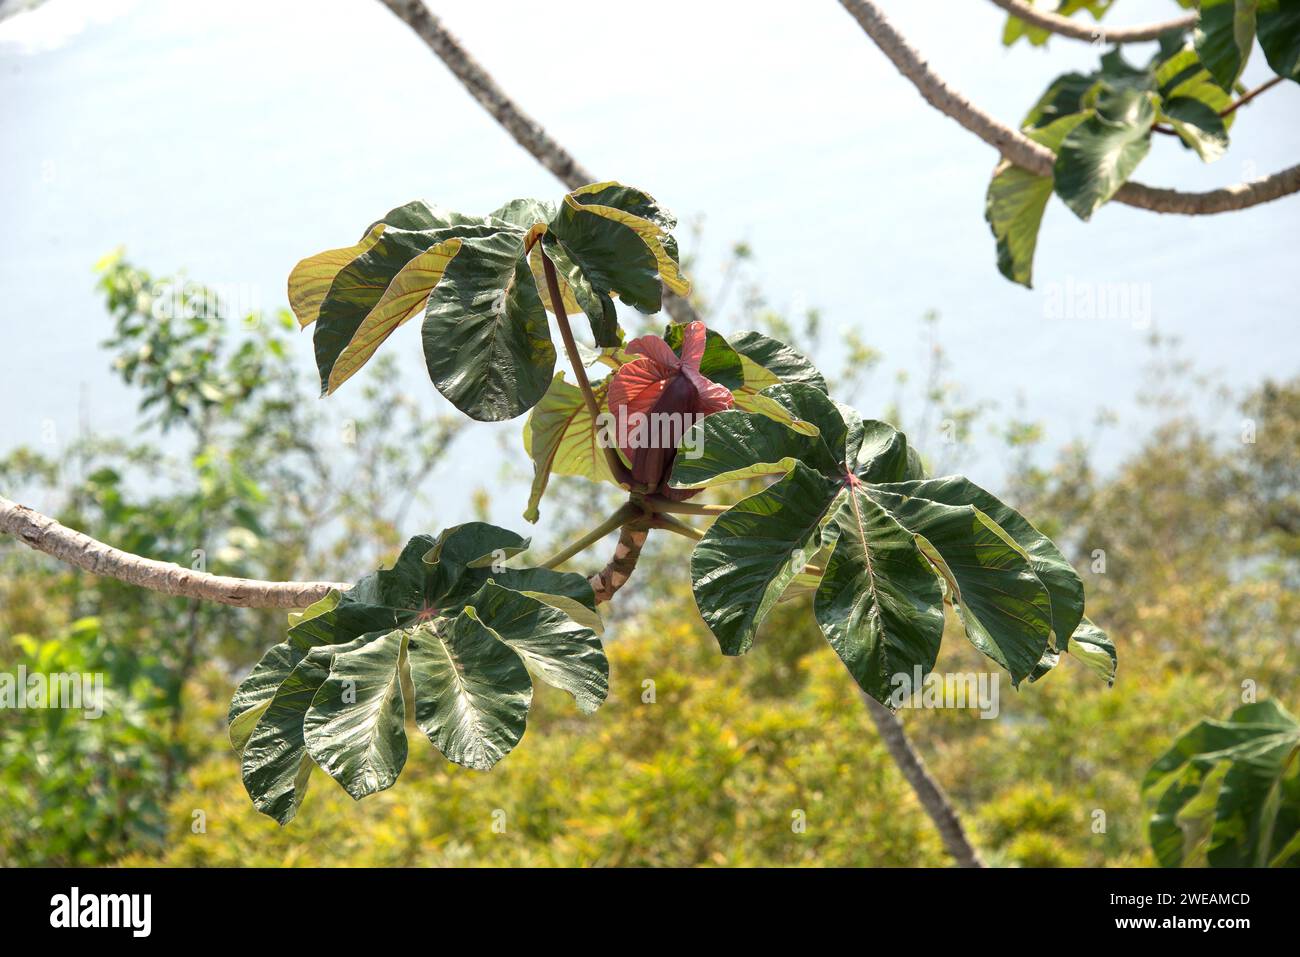 Snakewood (Cecropia peltata) is an evergreen invasive tree native to tropical Americas. This photo was taken near Paraty, Brazil. Palmate leaves detai Stock Photo